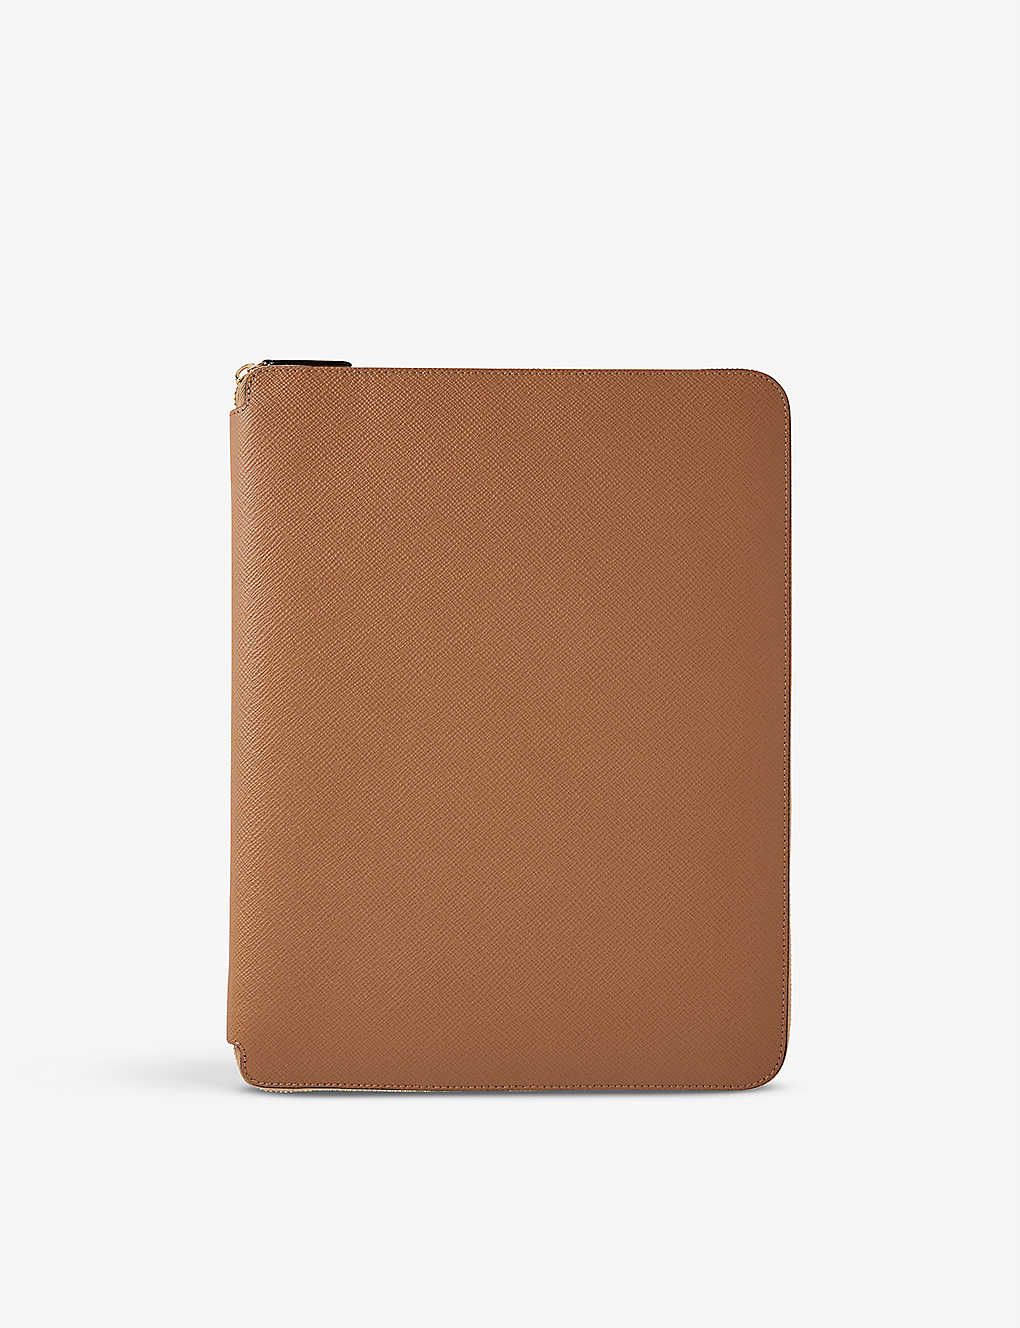 Panama zip leather writing folder 33cm | Selfridges